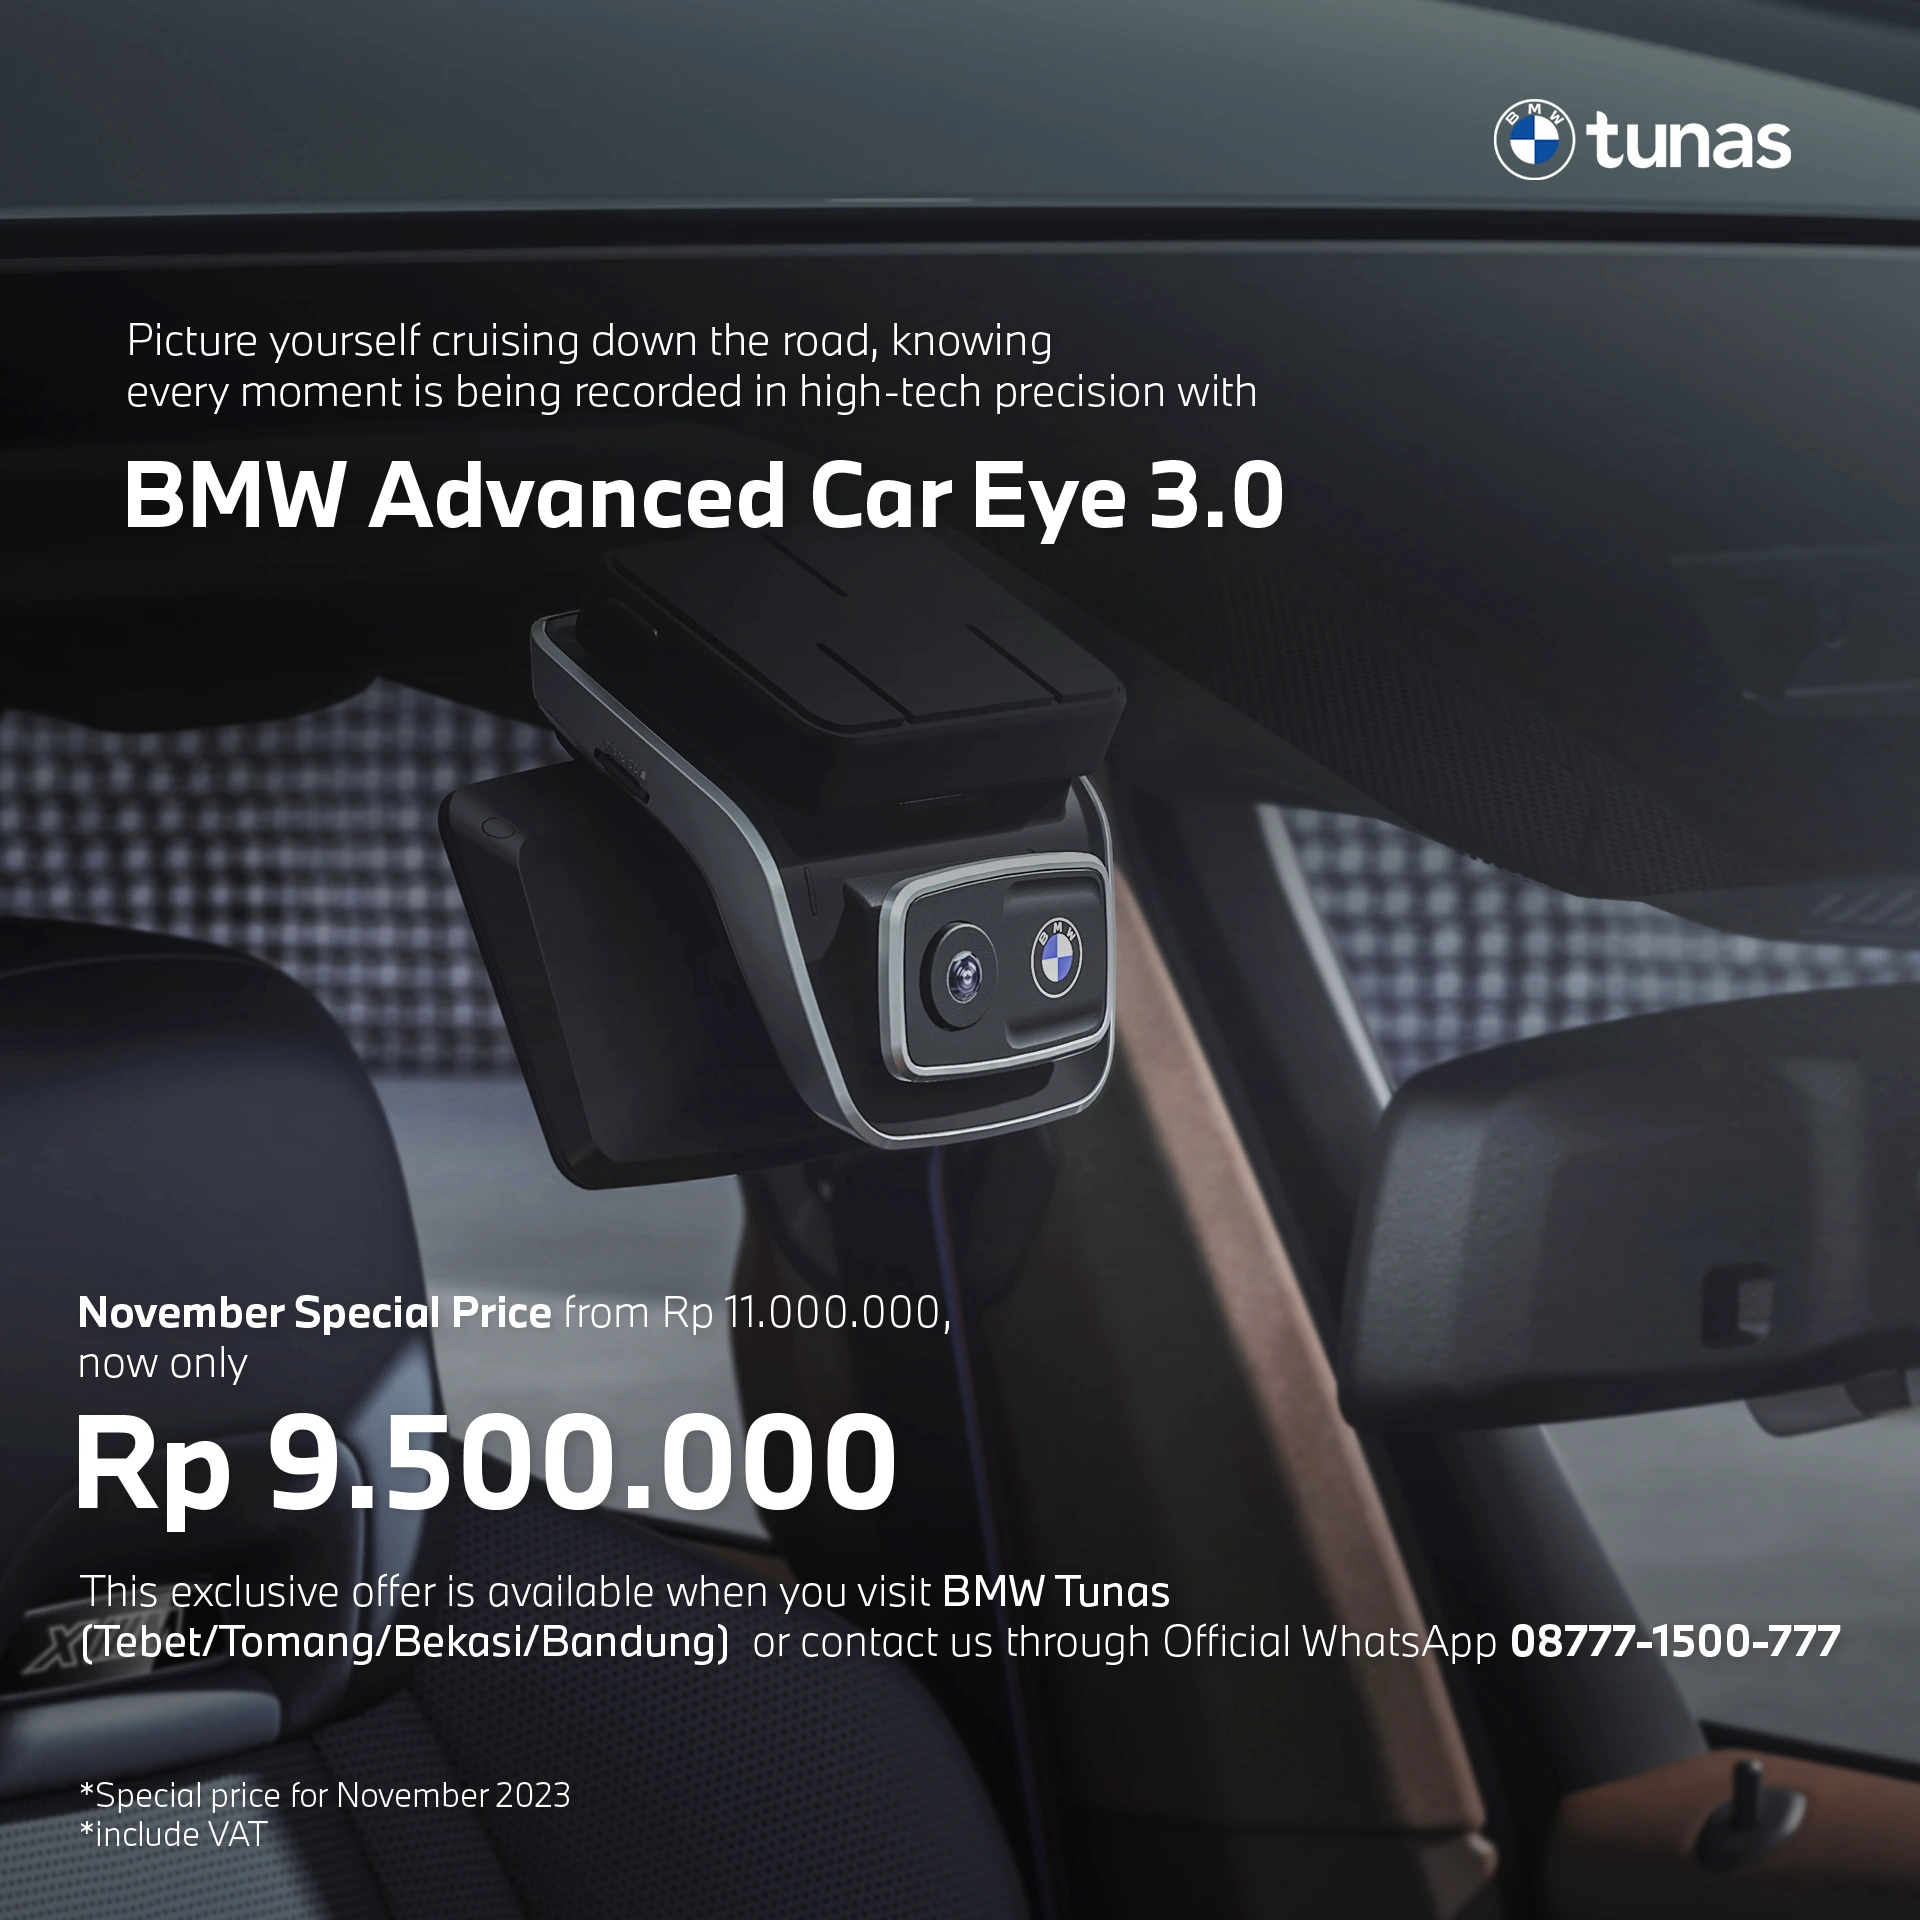 promo bmw advanced car eye 3.0